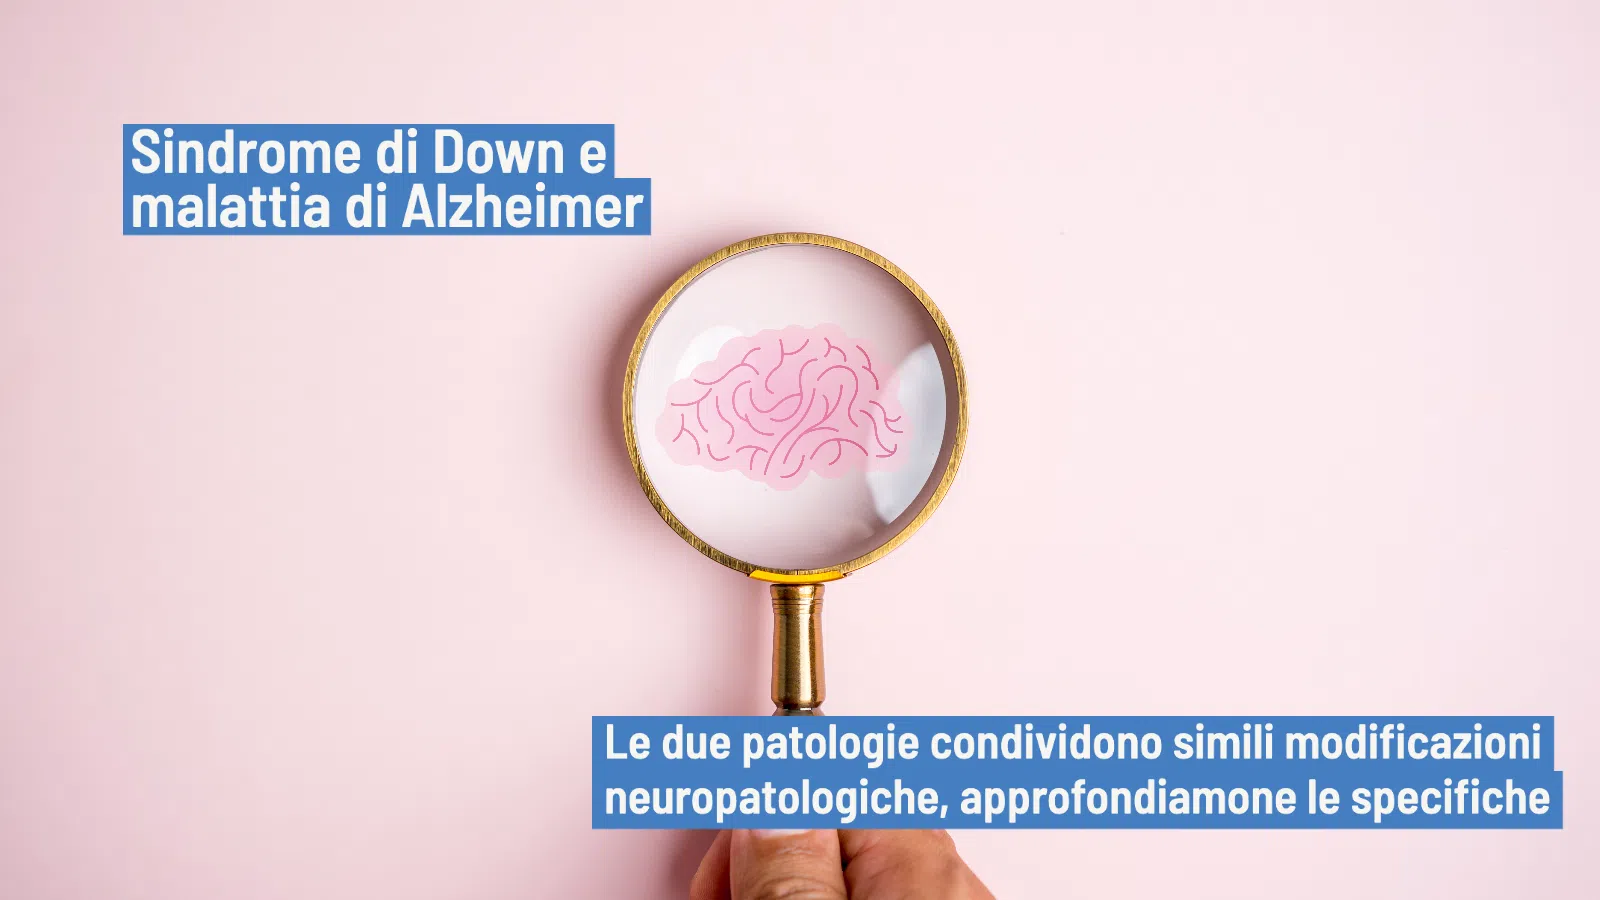 Sindrome di Down e malattia di Alzheimer: quale legame - Neuroscienze